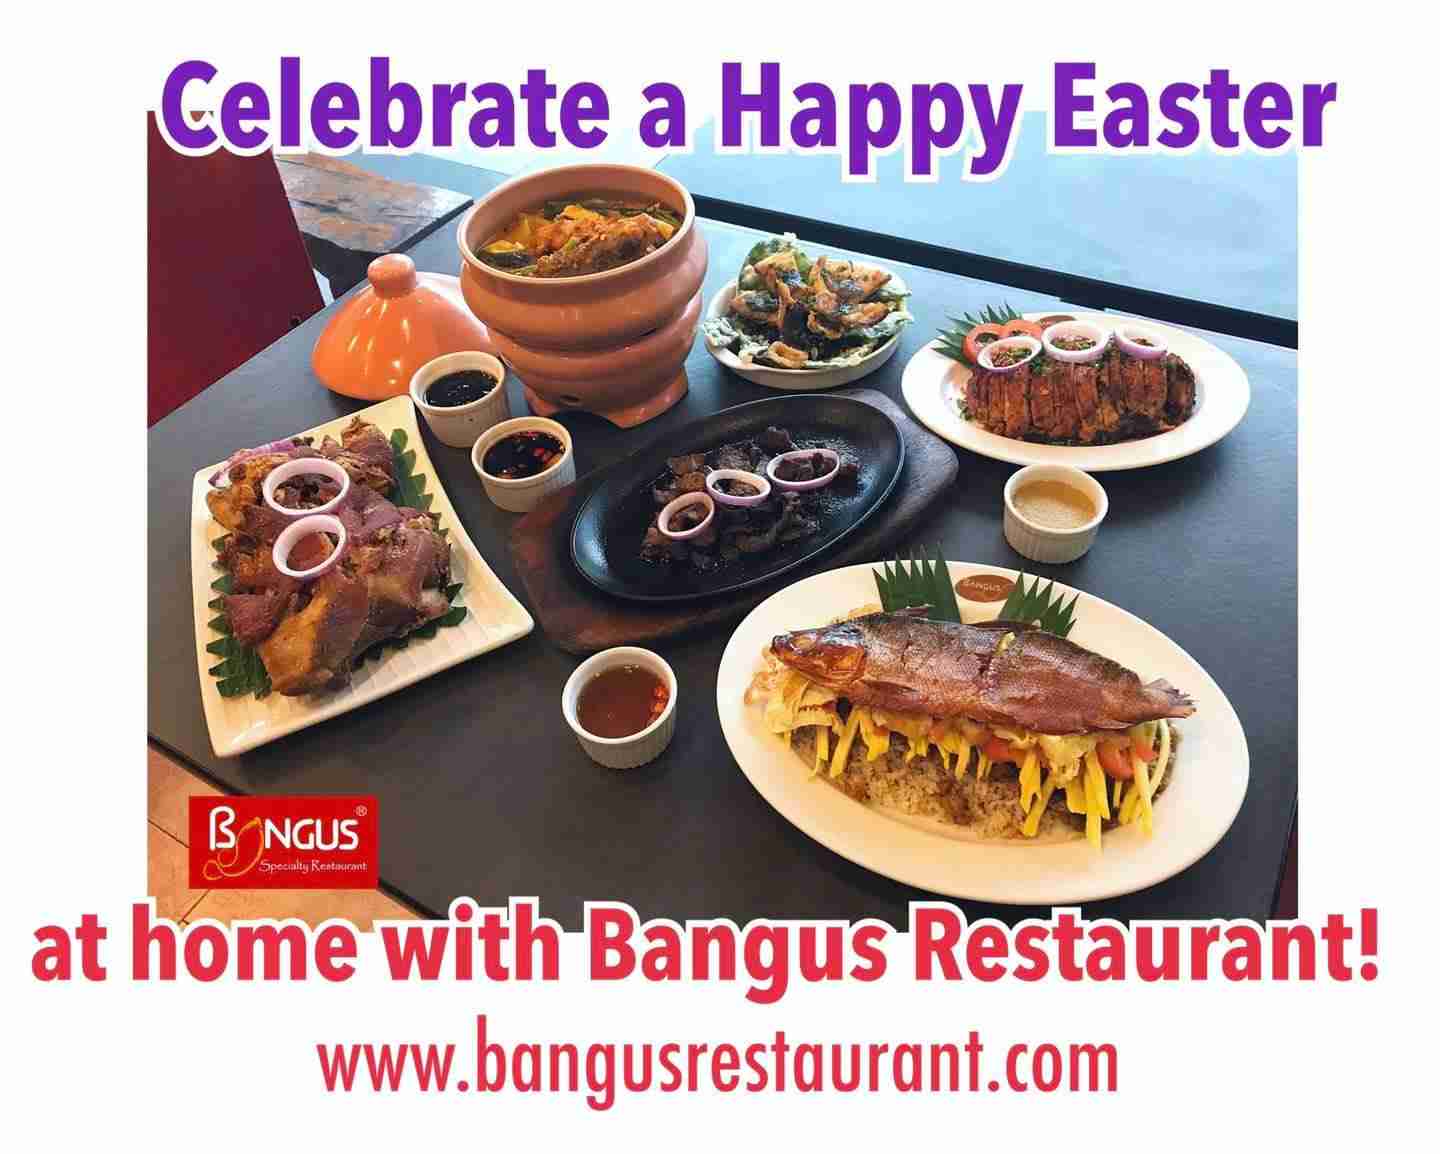 Bangus Restaurant